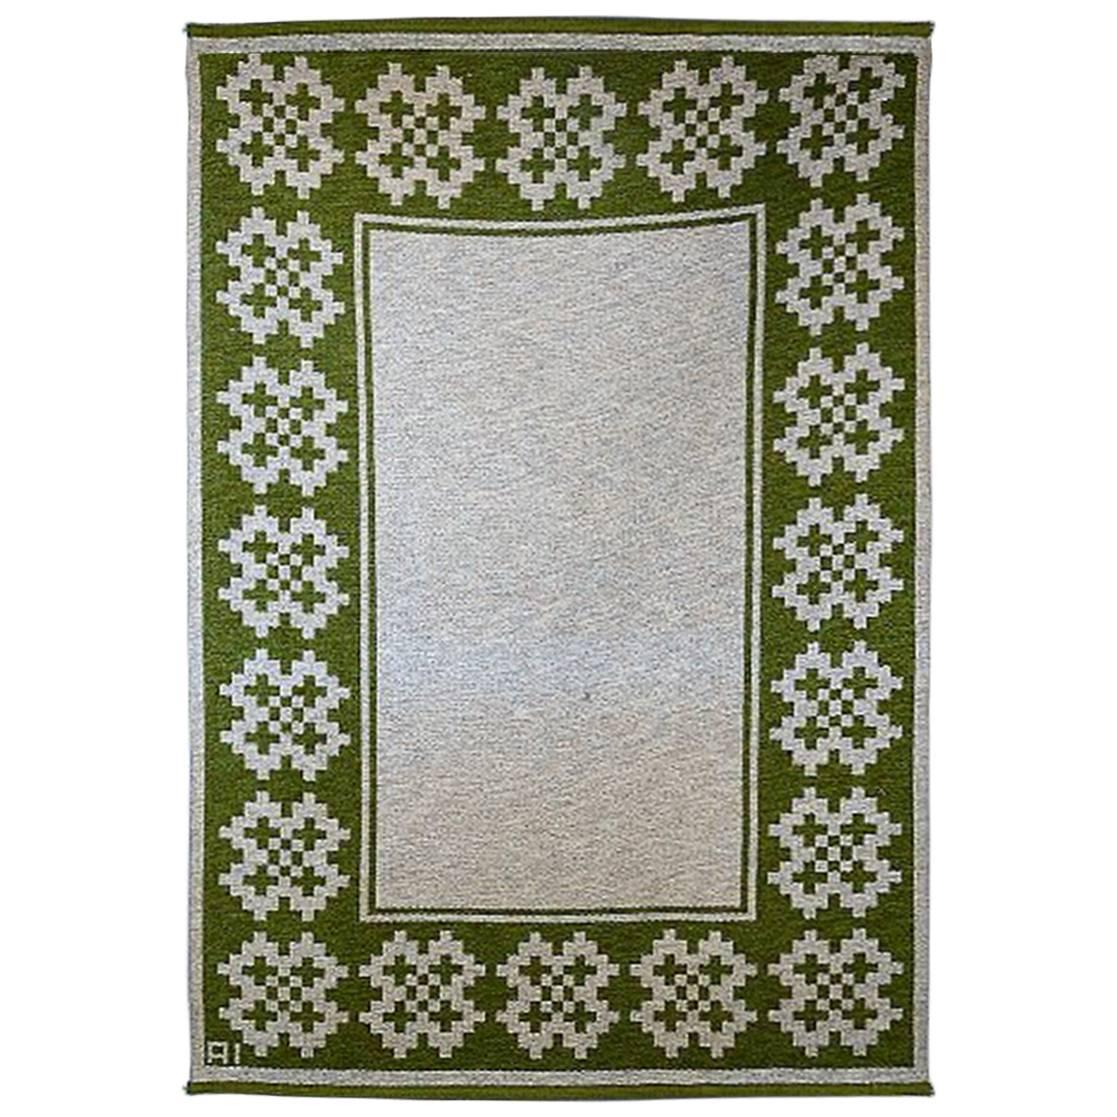 Röllakan, Swedish Design, 1960s Carpet